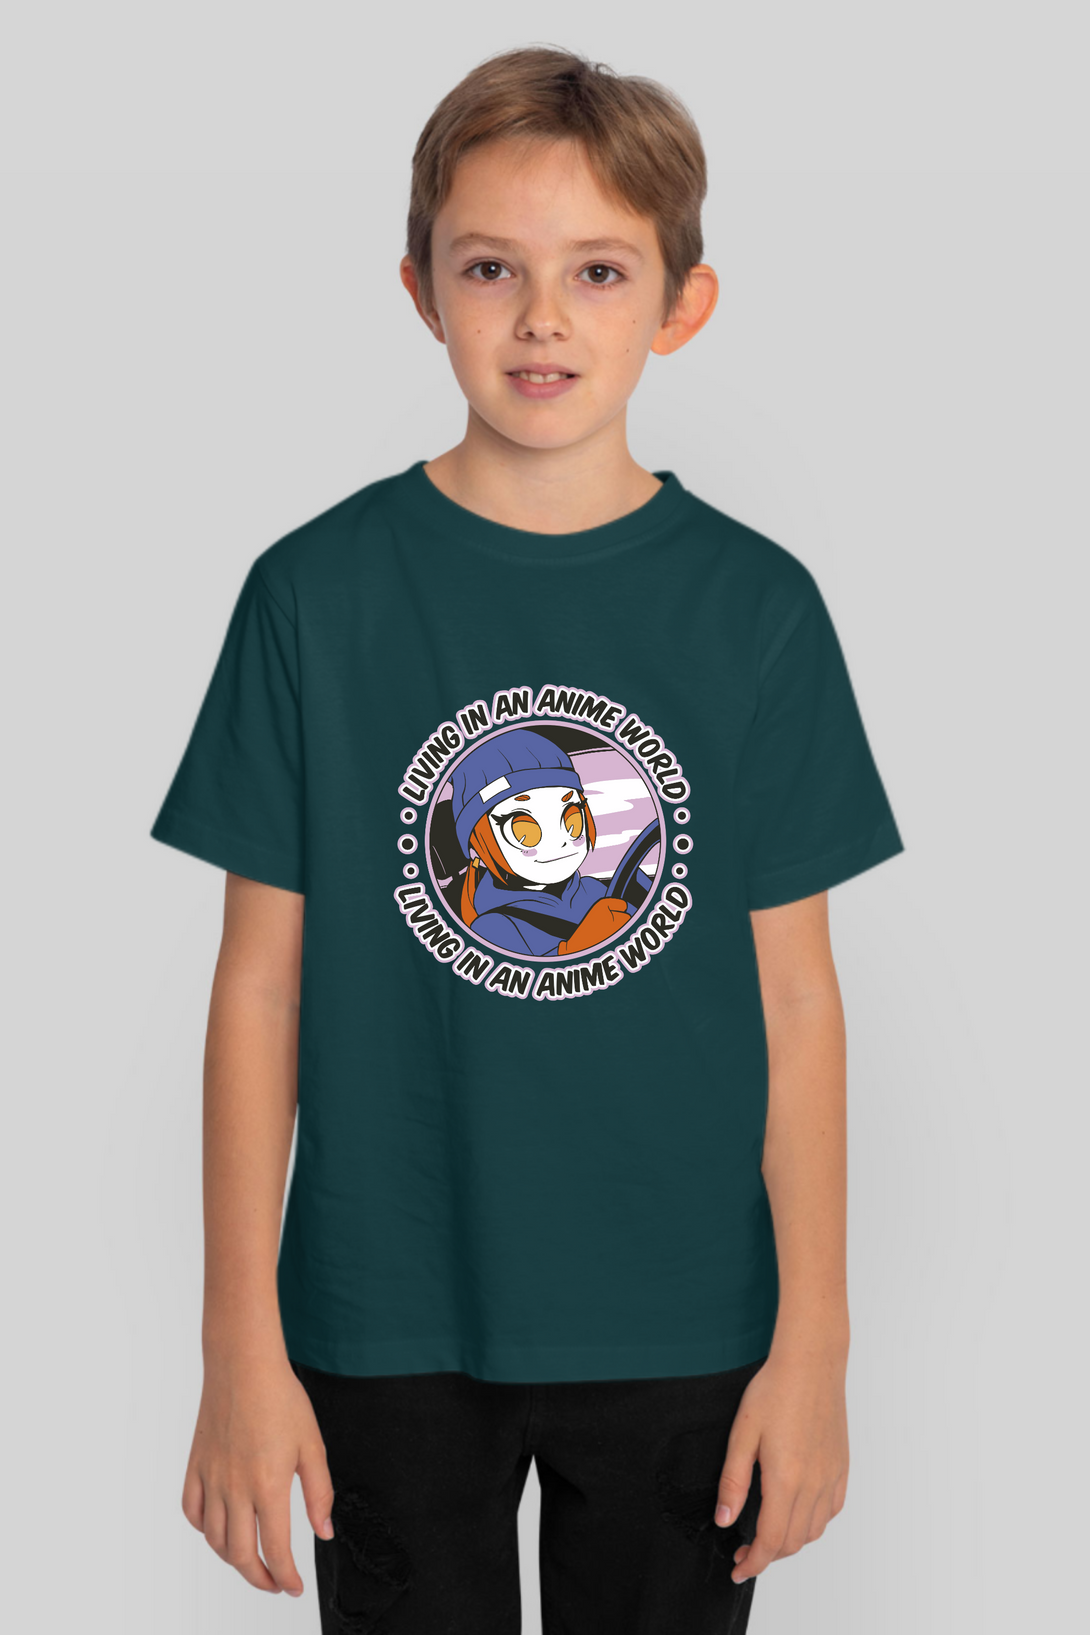 Cute Girl Driving Printed T-Shirt For Boy - WowWaves - 9